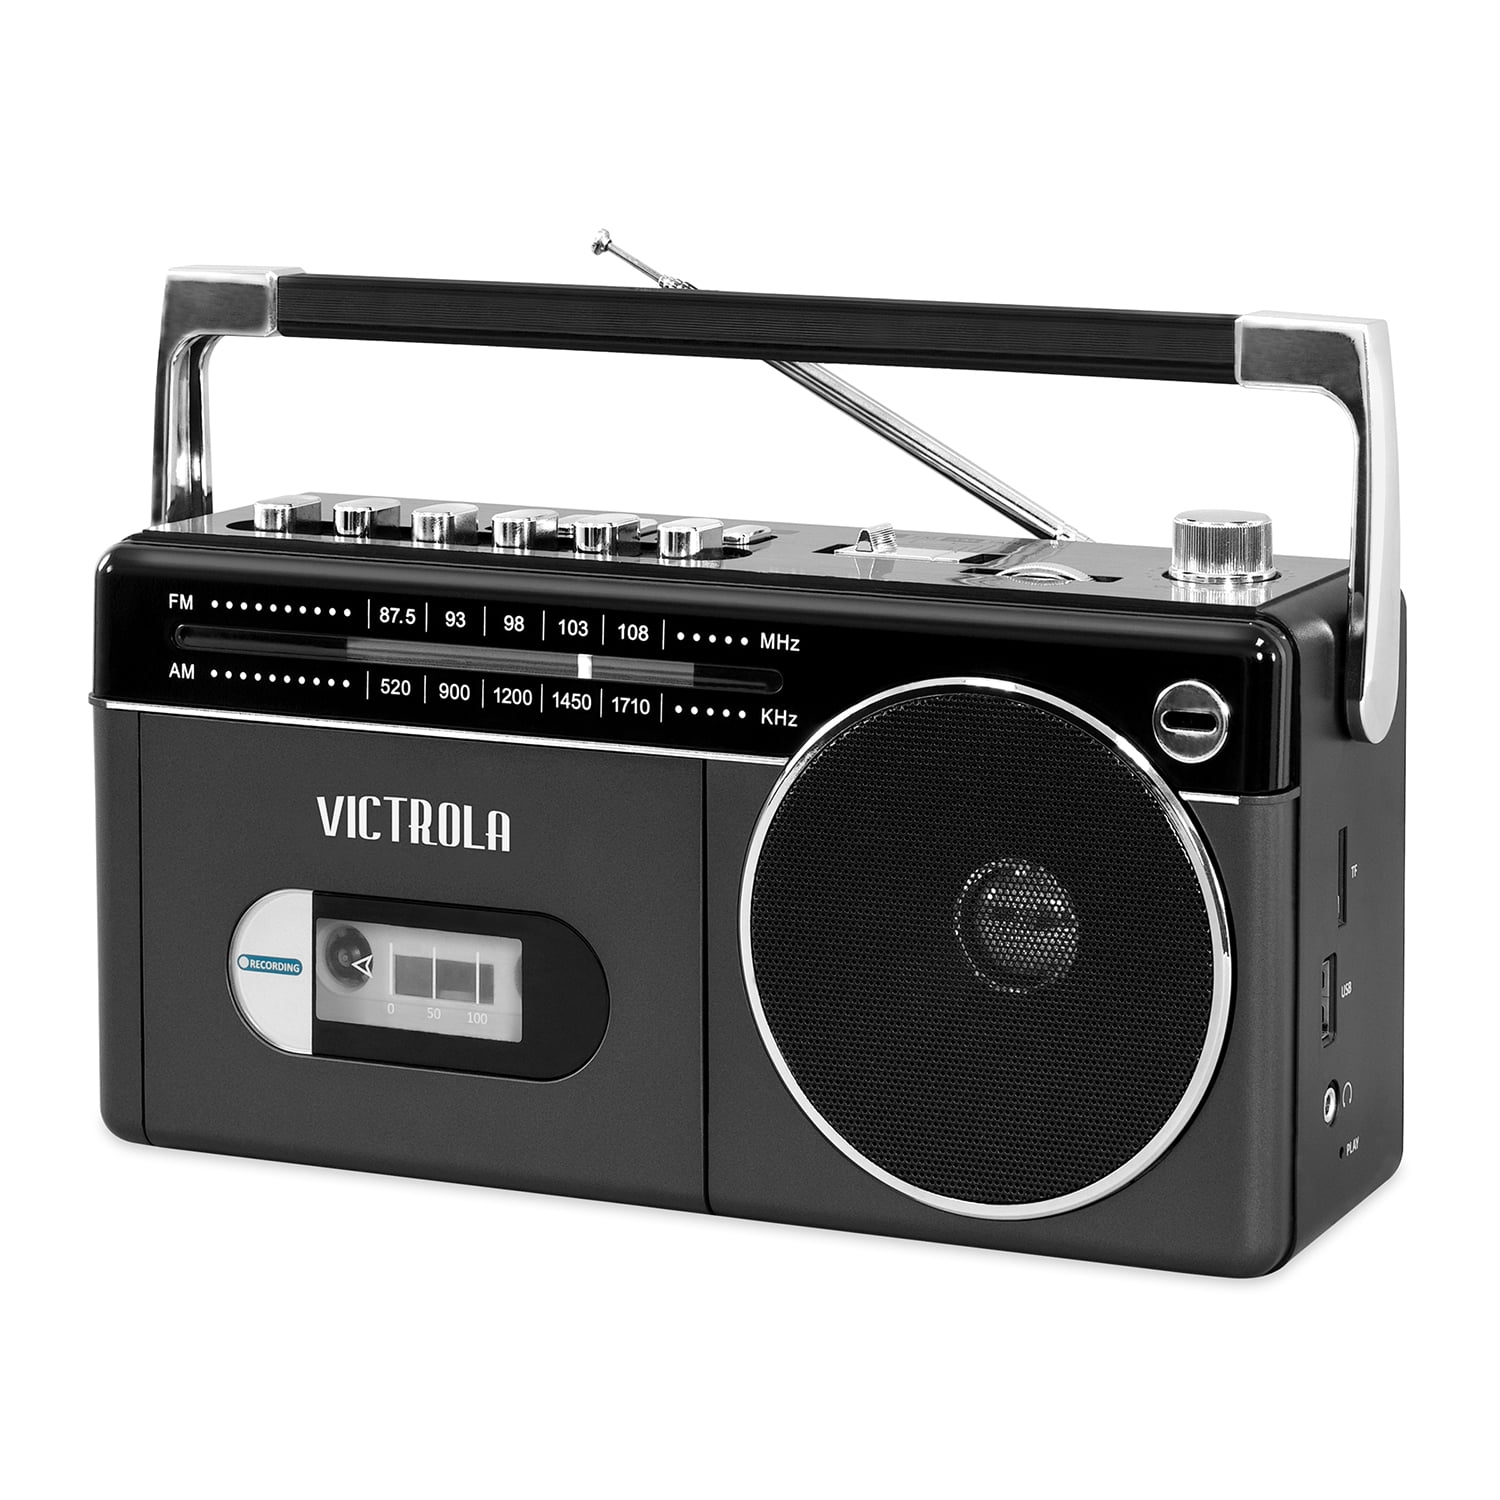  JENSEN Boombox estéreo portátil retro con reproductor de CD y  cassette, MCR-1000 con grabadora de cinta de casete dual con radio AM/FM,  oro rosa : Electrónica